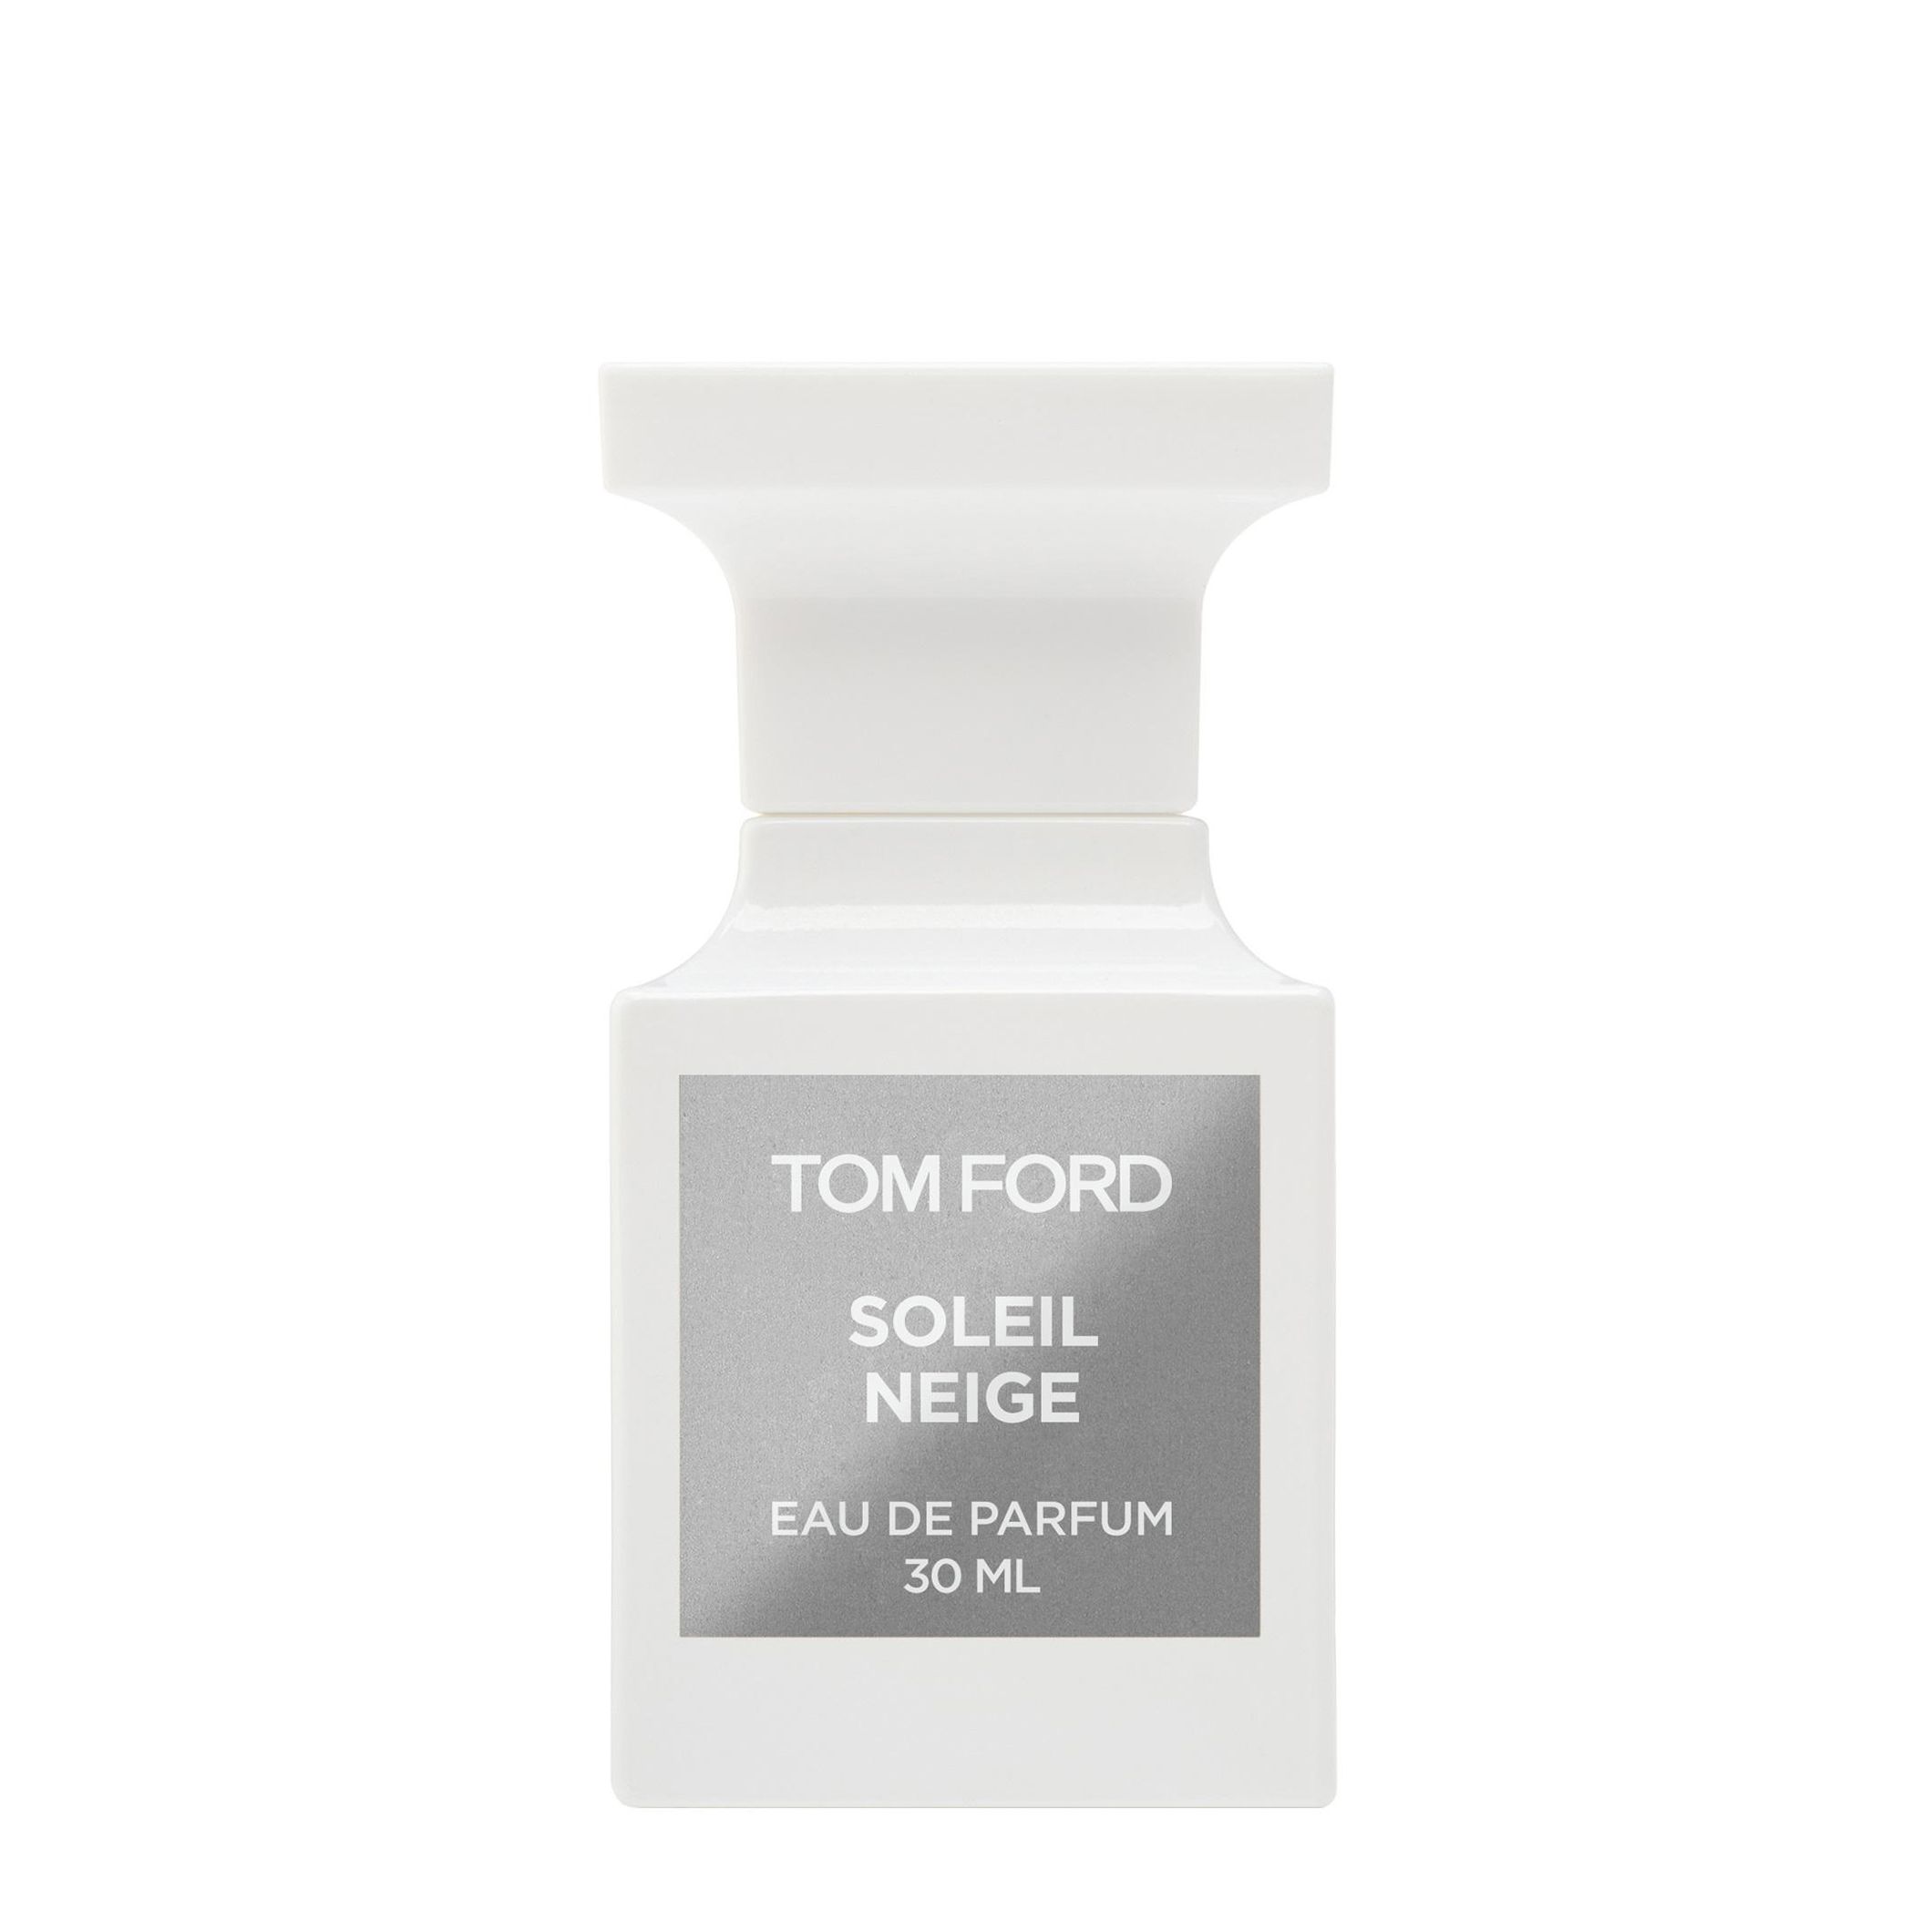 Вода парфюмерная Tom Ford Soleil Neige, унисекс, 30 мл tom ford soleil neige 30